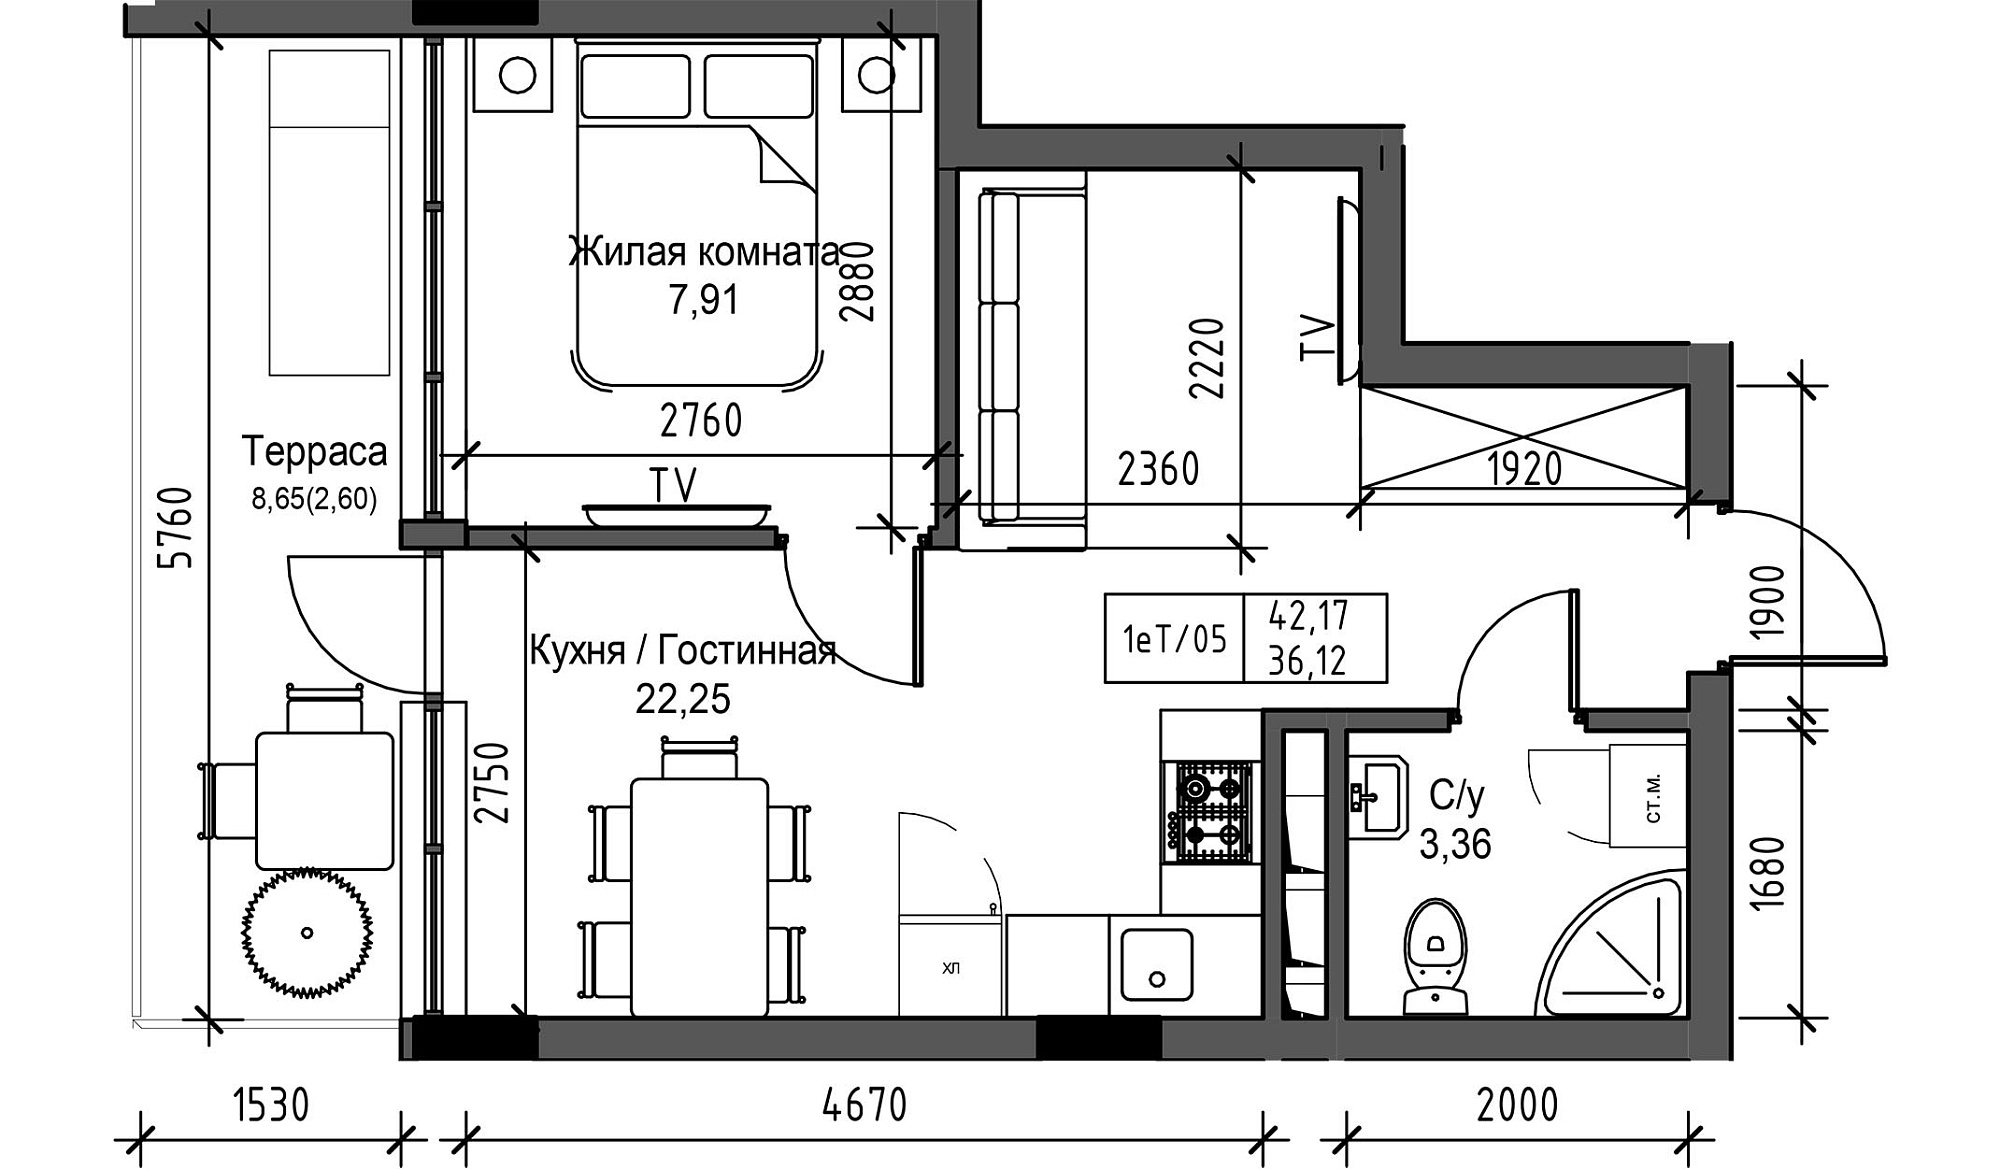 Планування 1-к квартира площею 36.12м2, UM-003-03/0011.